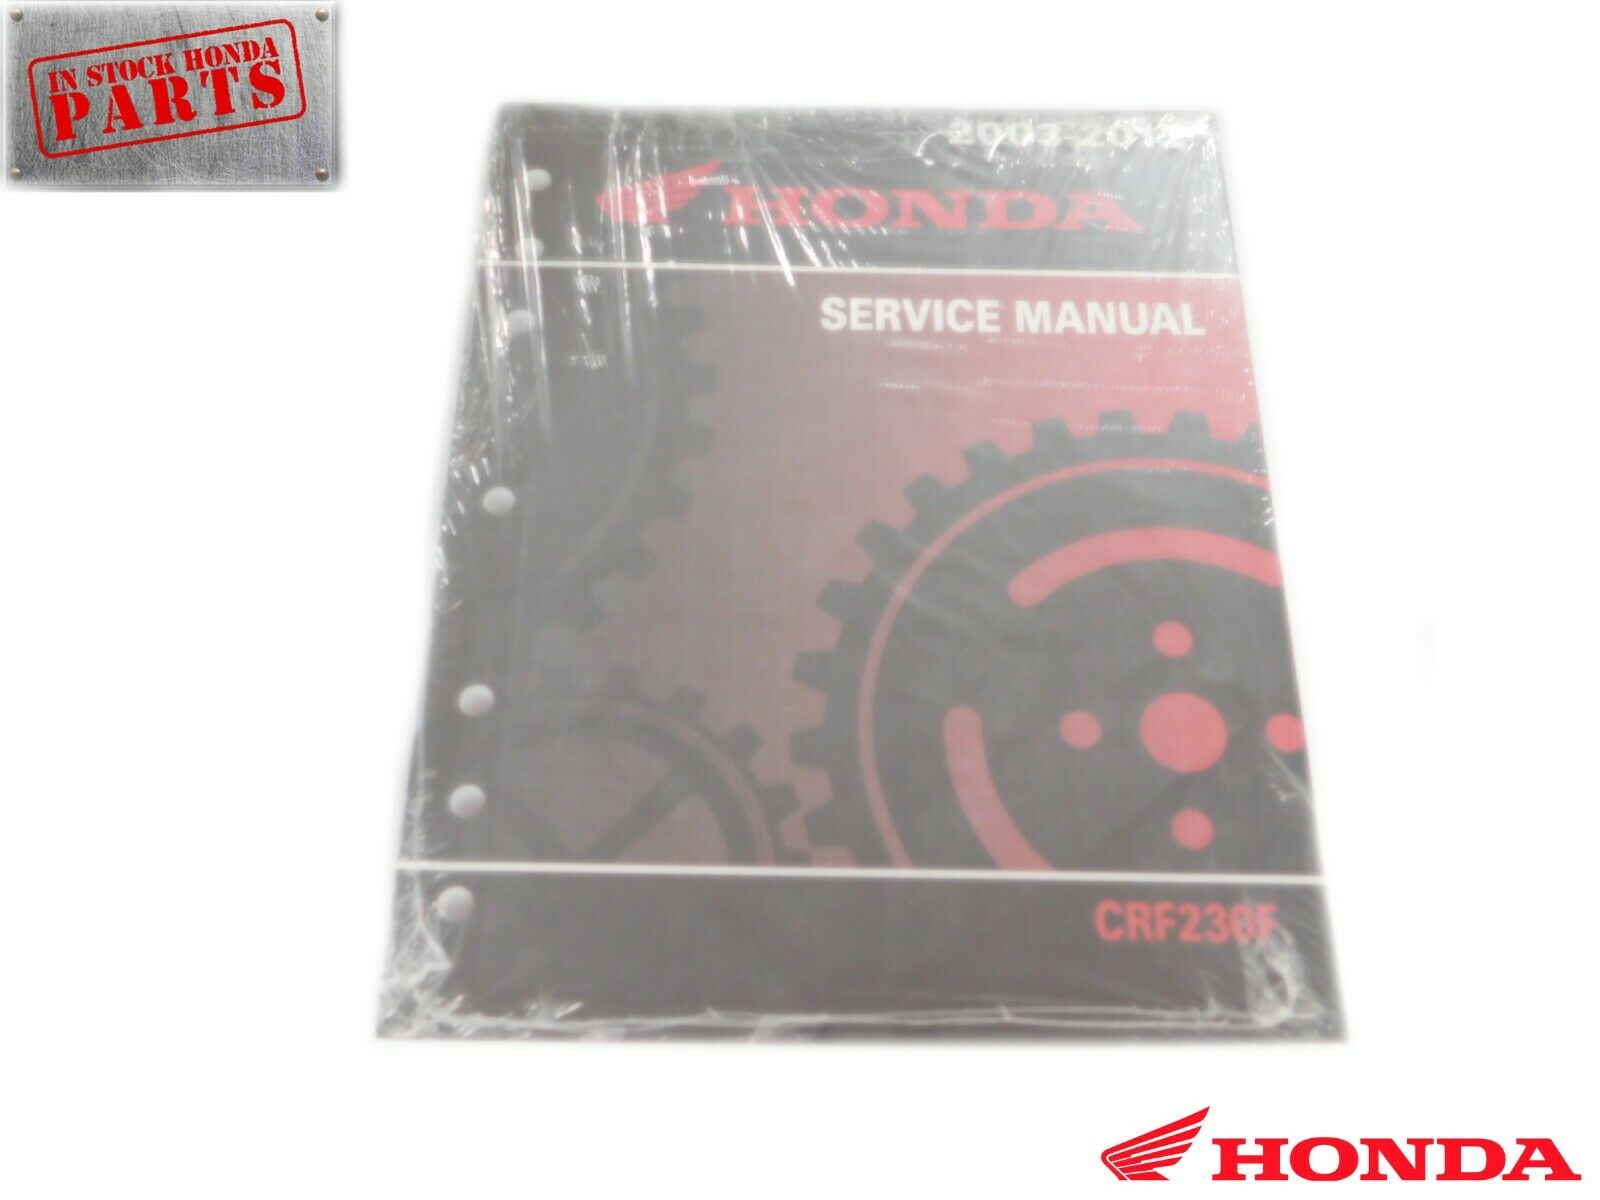 New Service Manual 2003-2014 CRF230F OEM Honda Shop Repair Maintenance Book